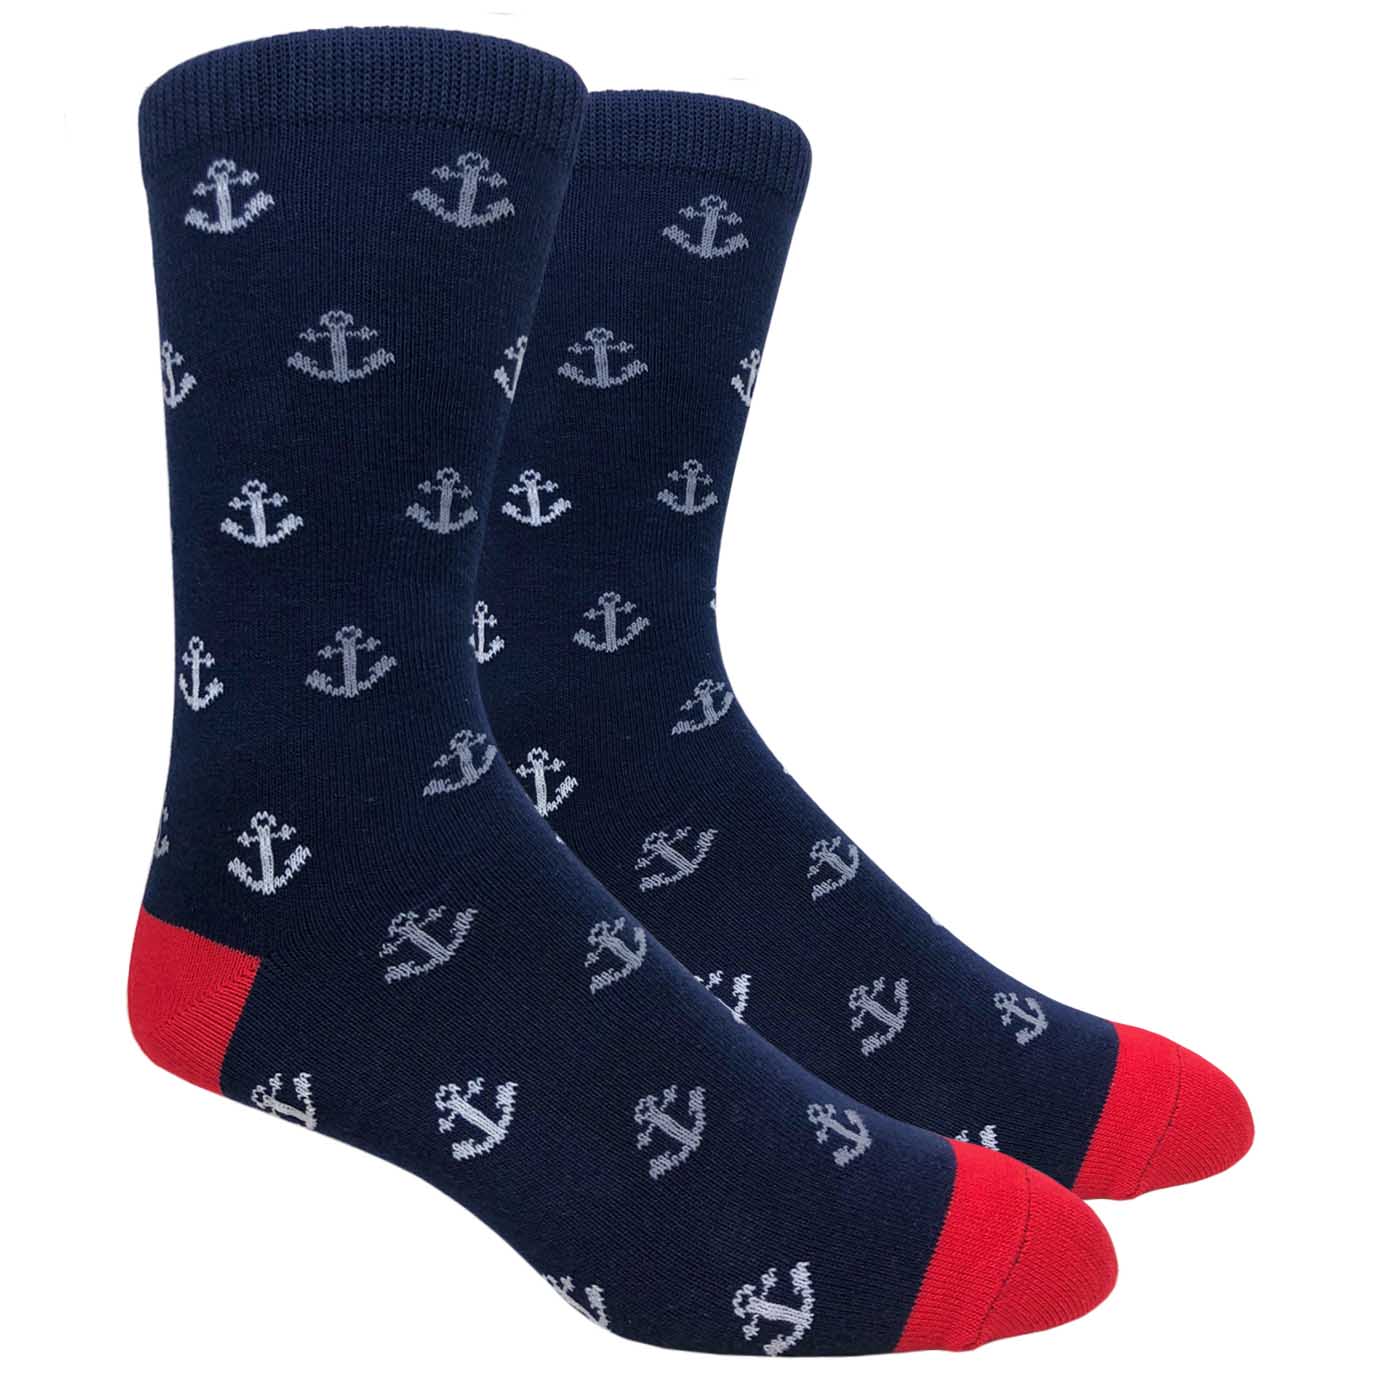 FineFit Black Label Novelty Socks - Navy Blue Anchors